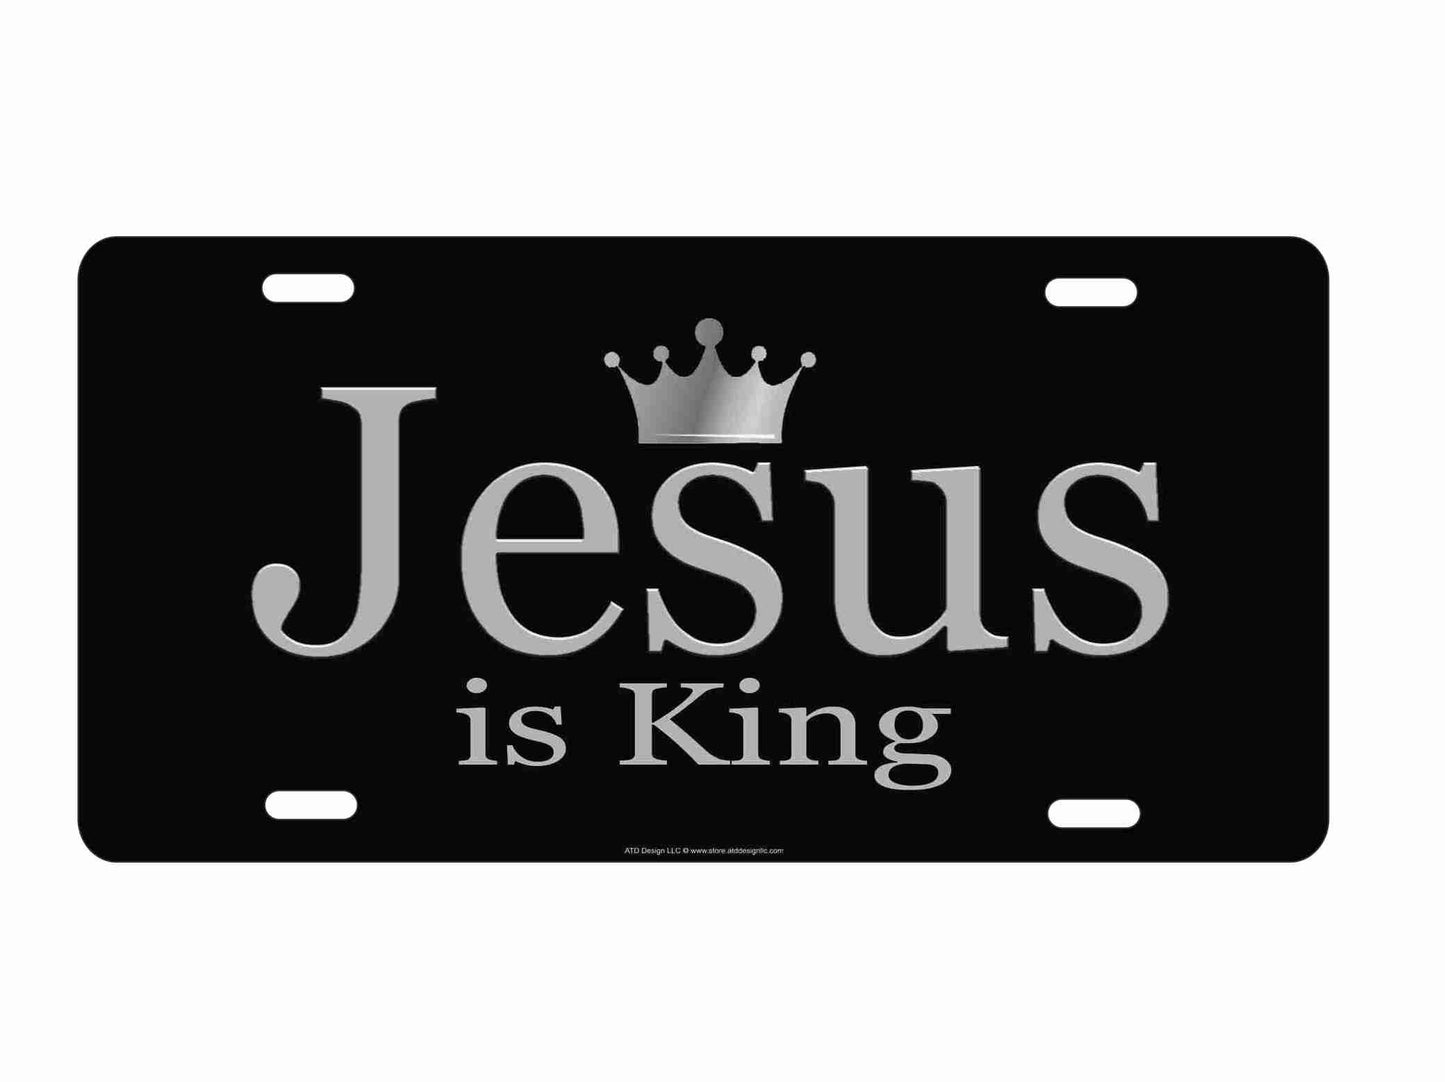 Jesus is King novelty front license plate Decorative vanity aluminum car tag grey on black